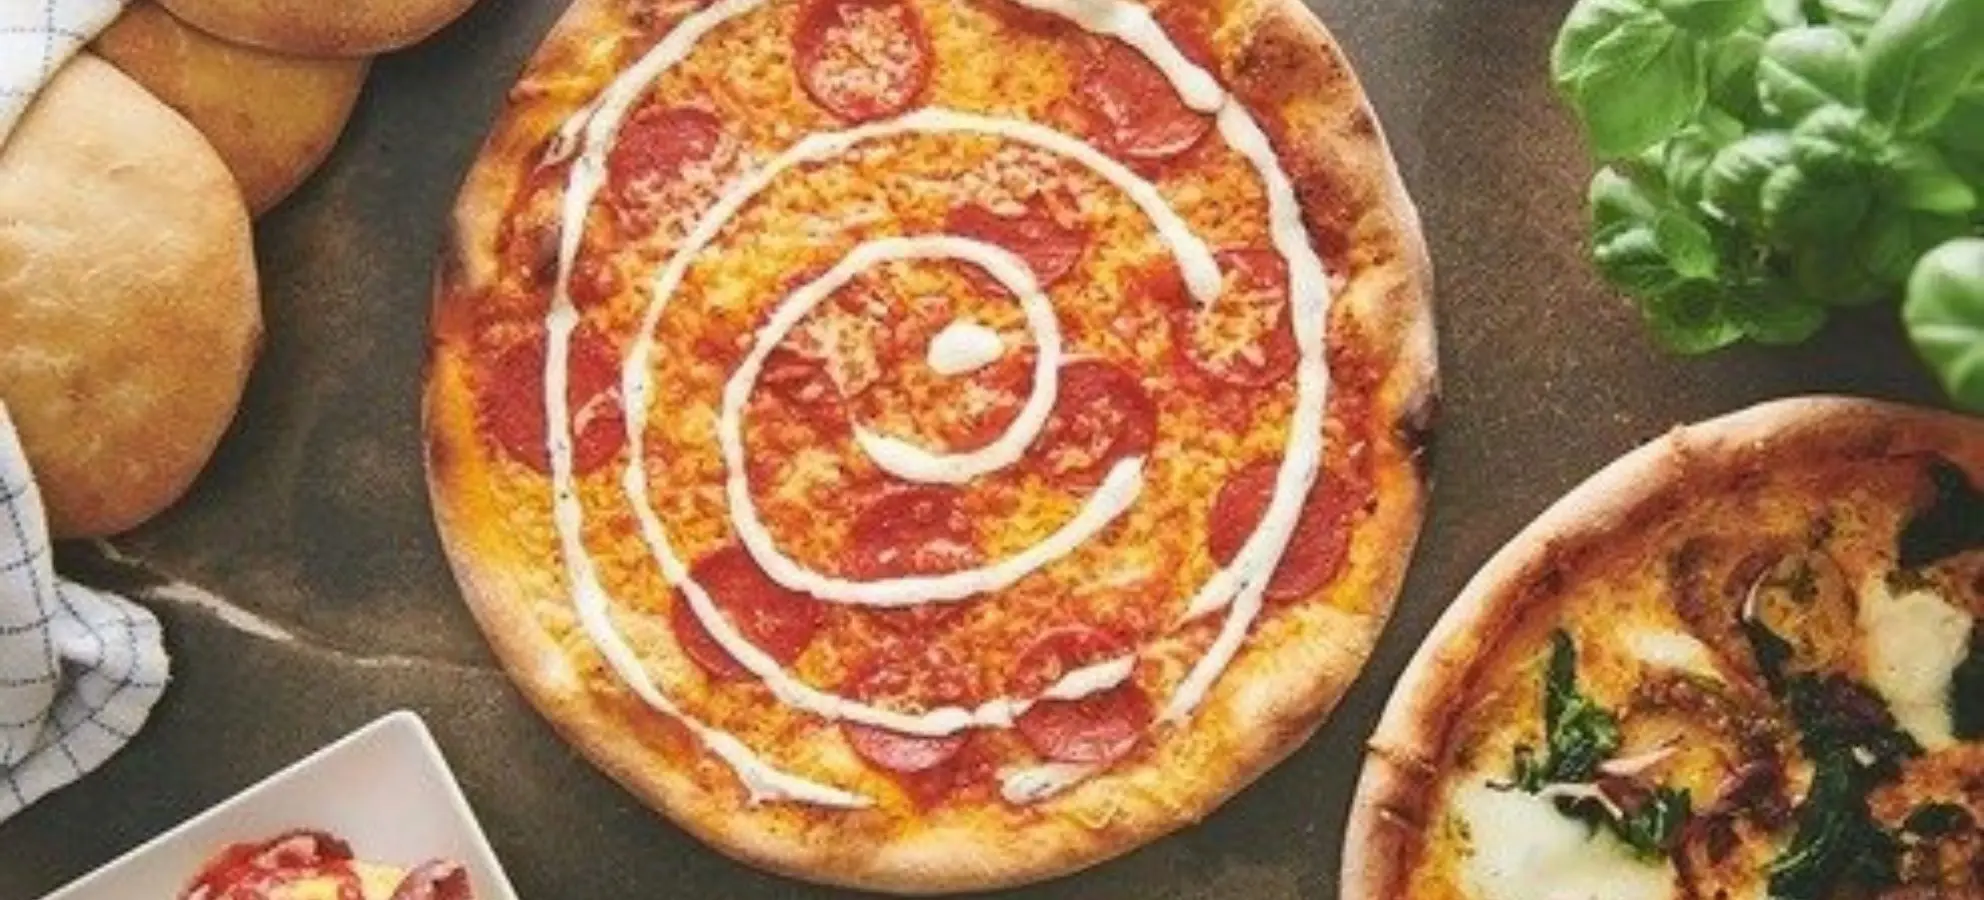 Enricco Pizza 2000